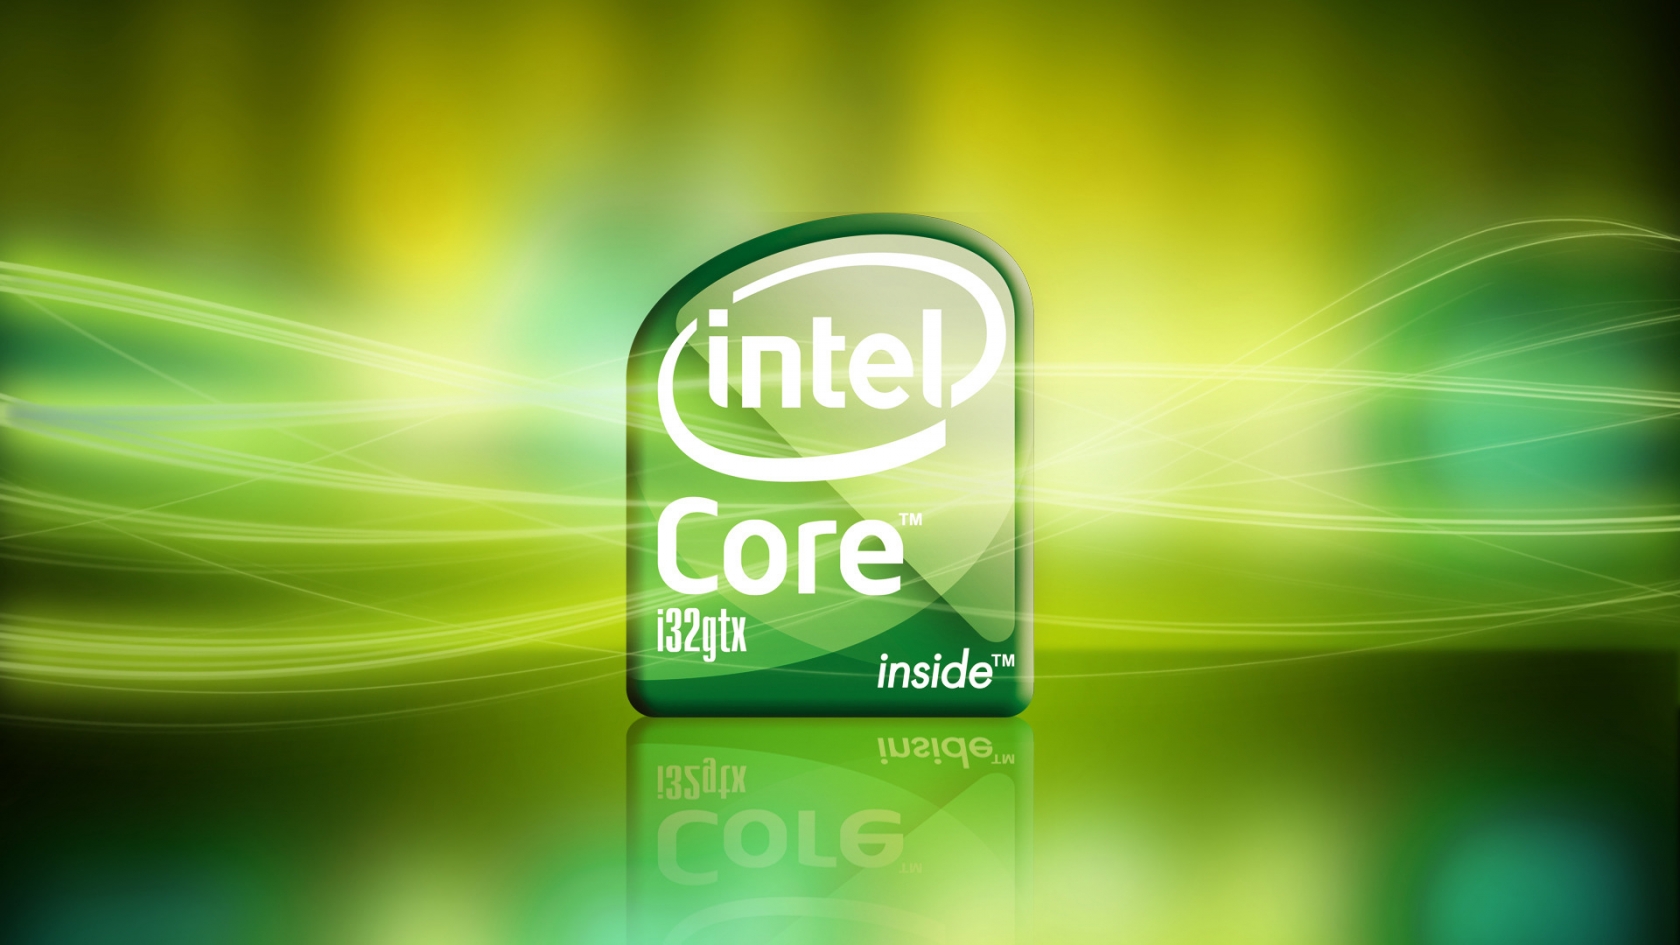 Intel Core i32gtx for 1680 x 945 HDTV resolution